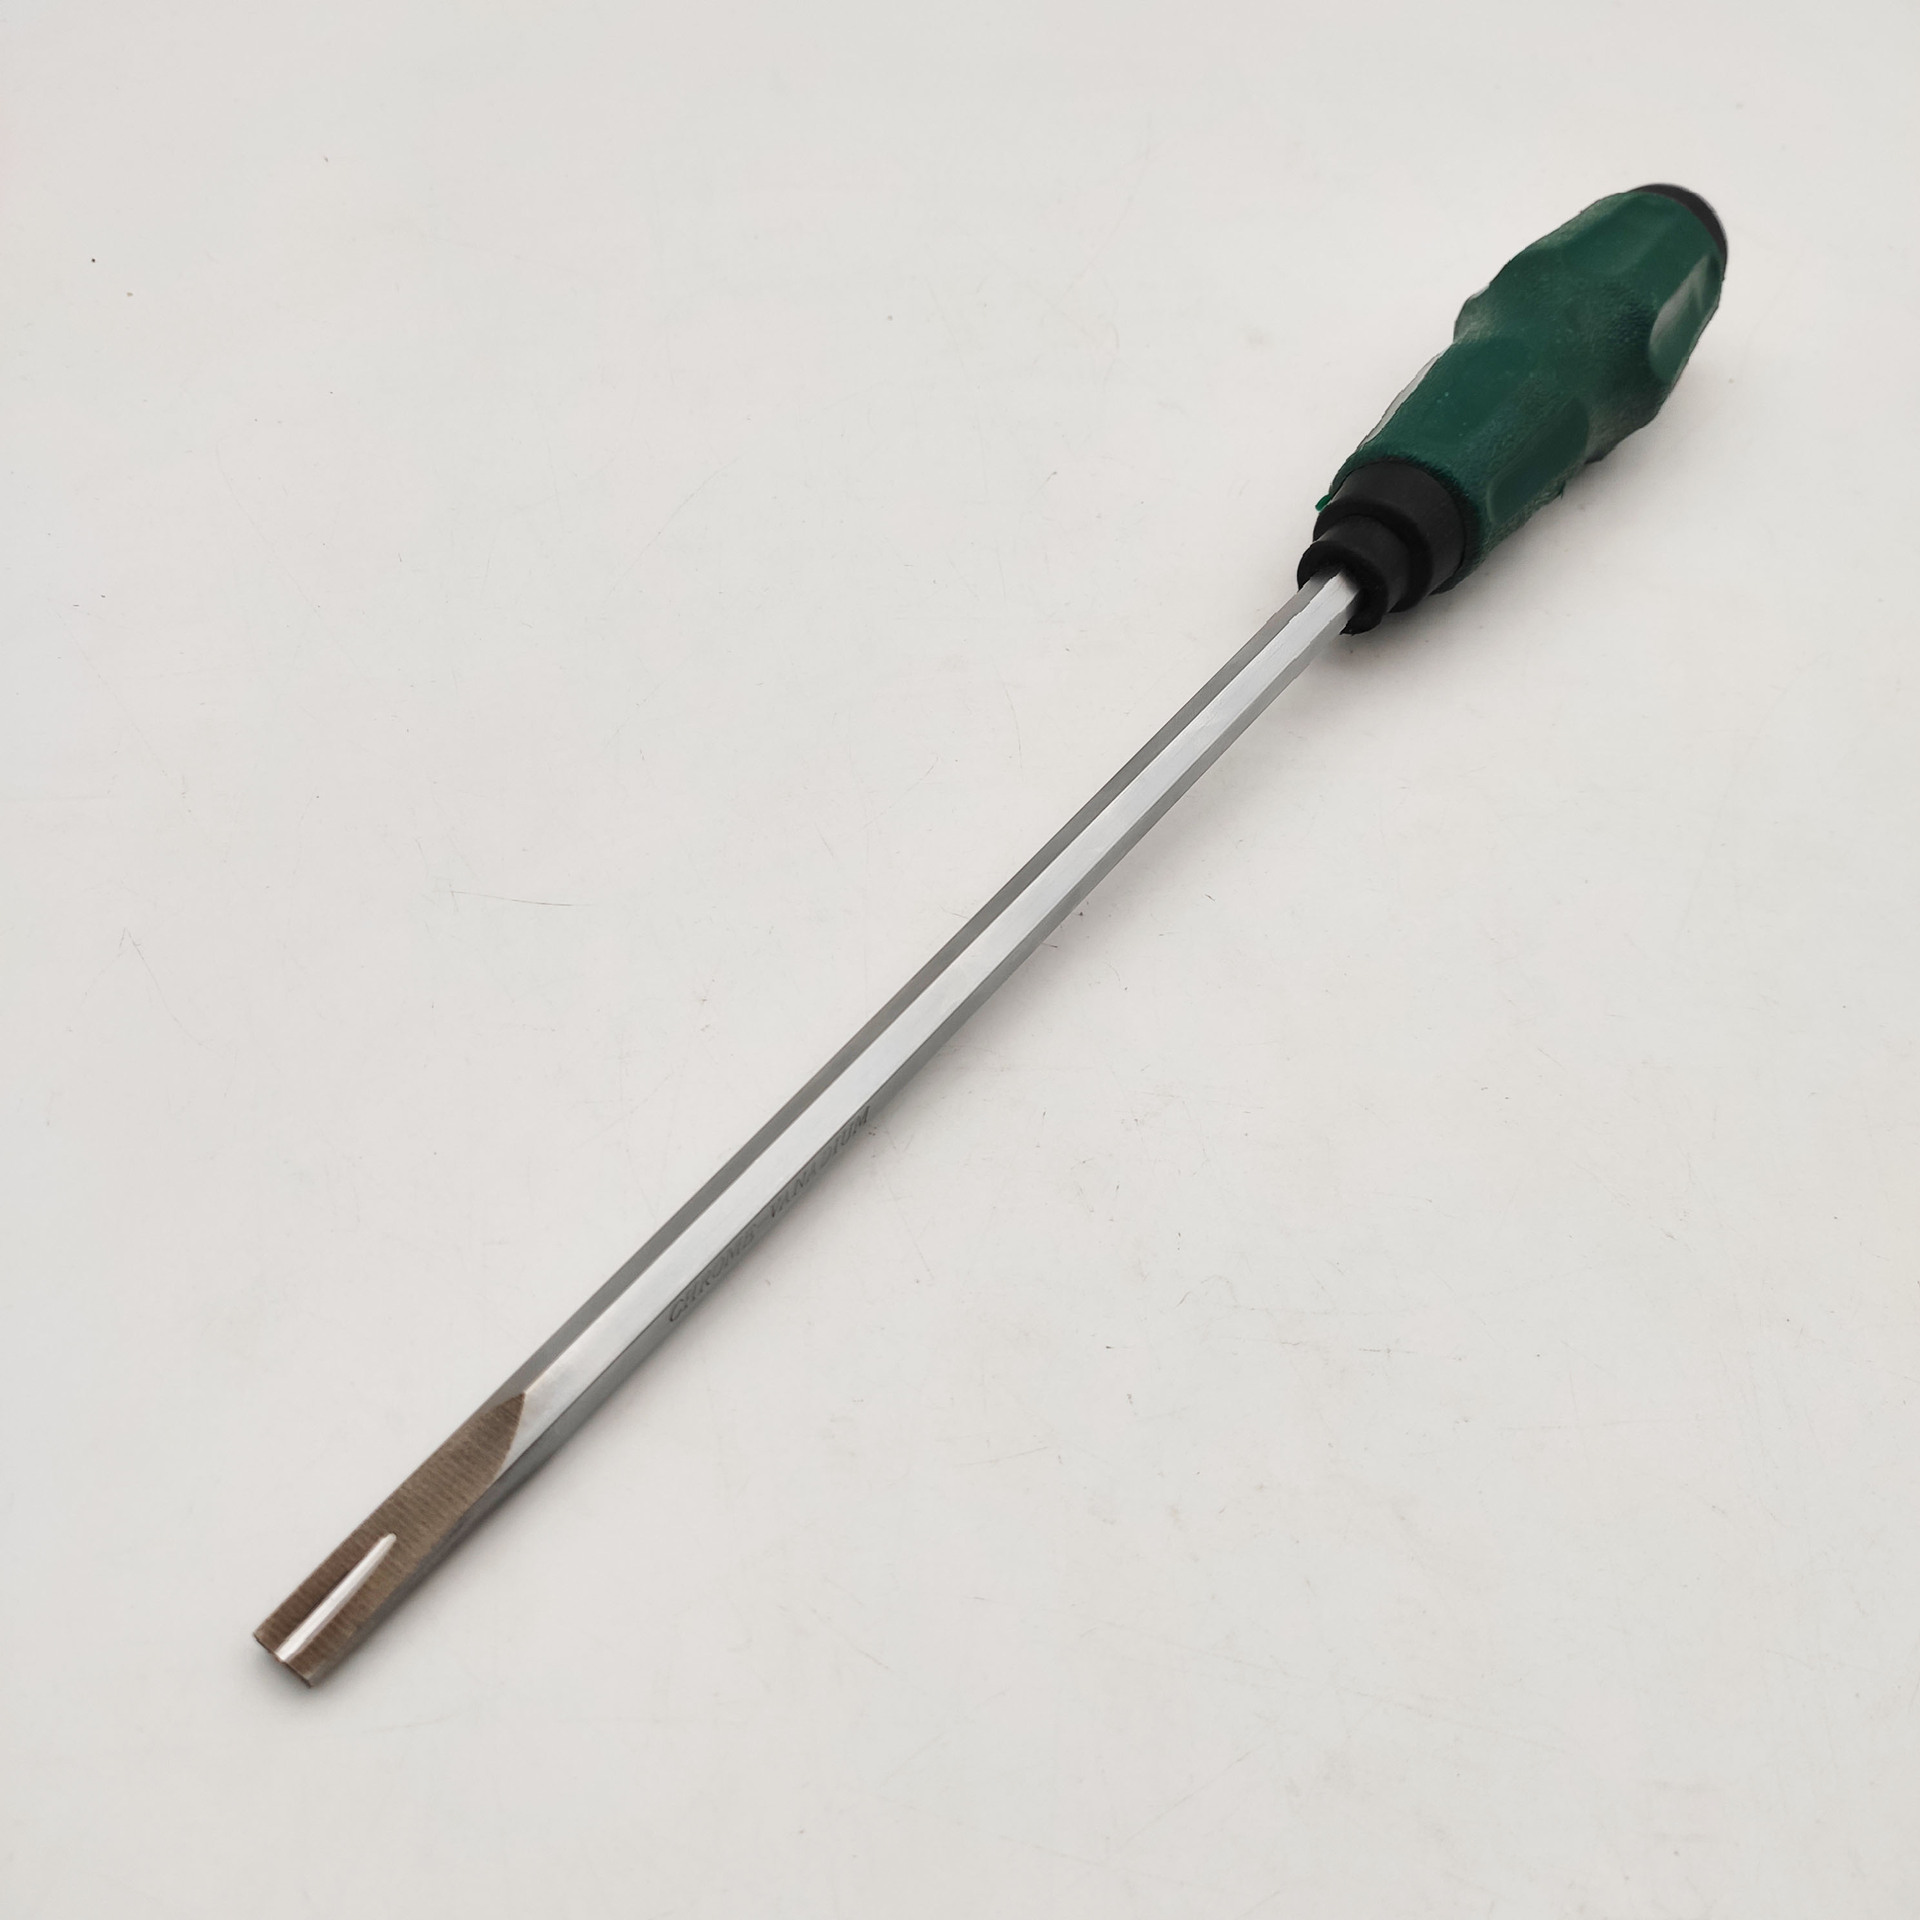 Pingpened screwdriver blade screwdriver C-class screwdriver locksmith repair supplies manufacturers wholesale and retail